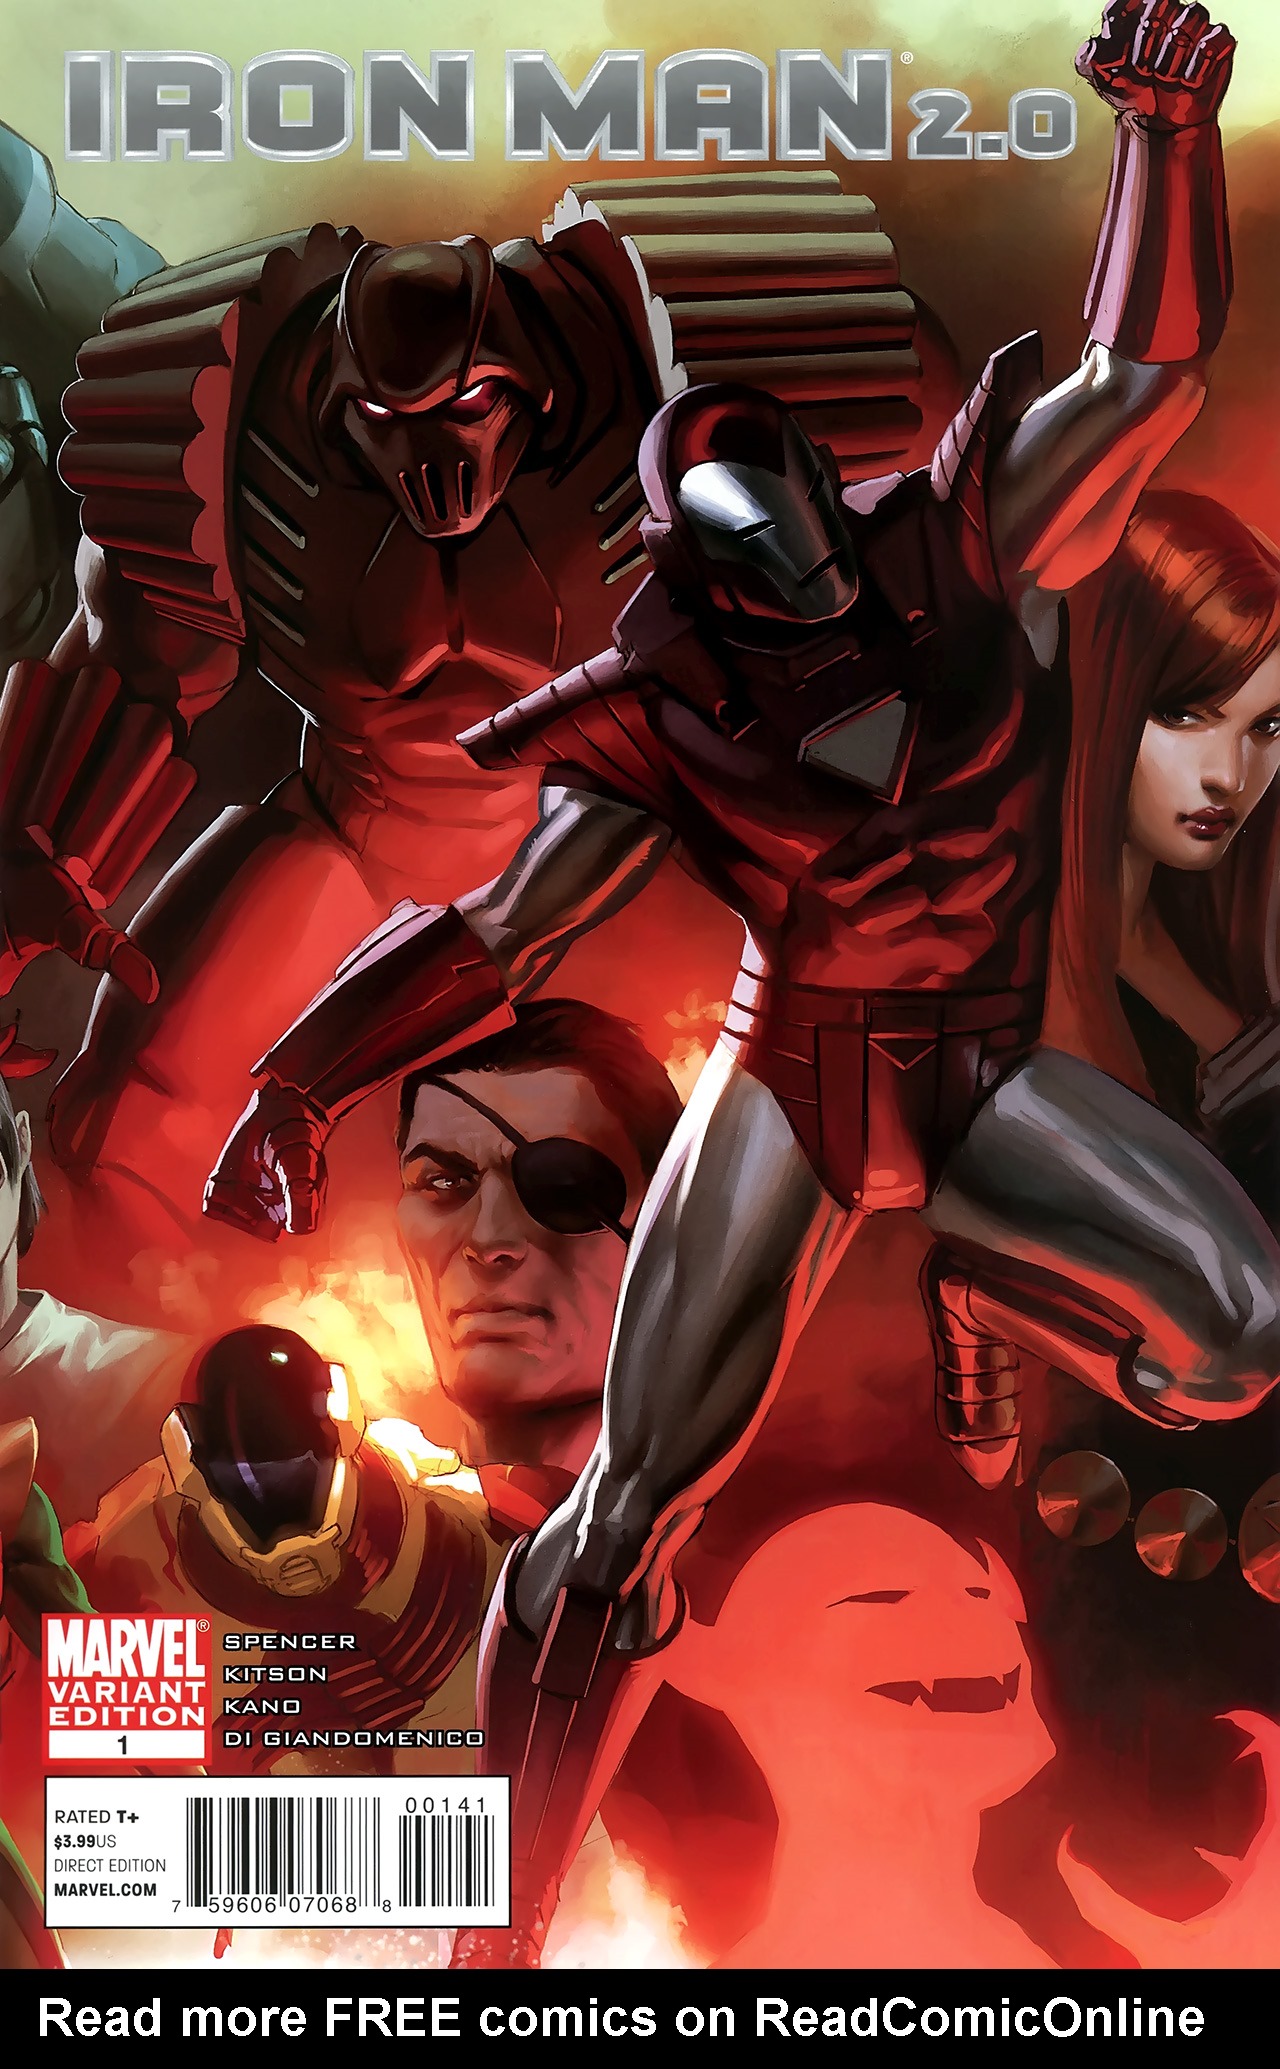 Read online Iron Man 2.0 comic -  Issue #1 - 3